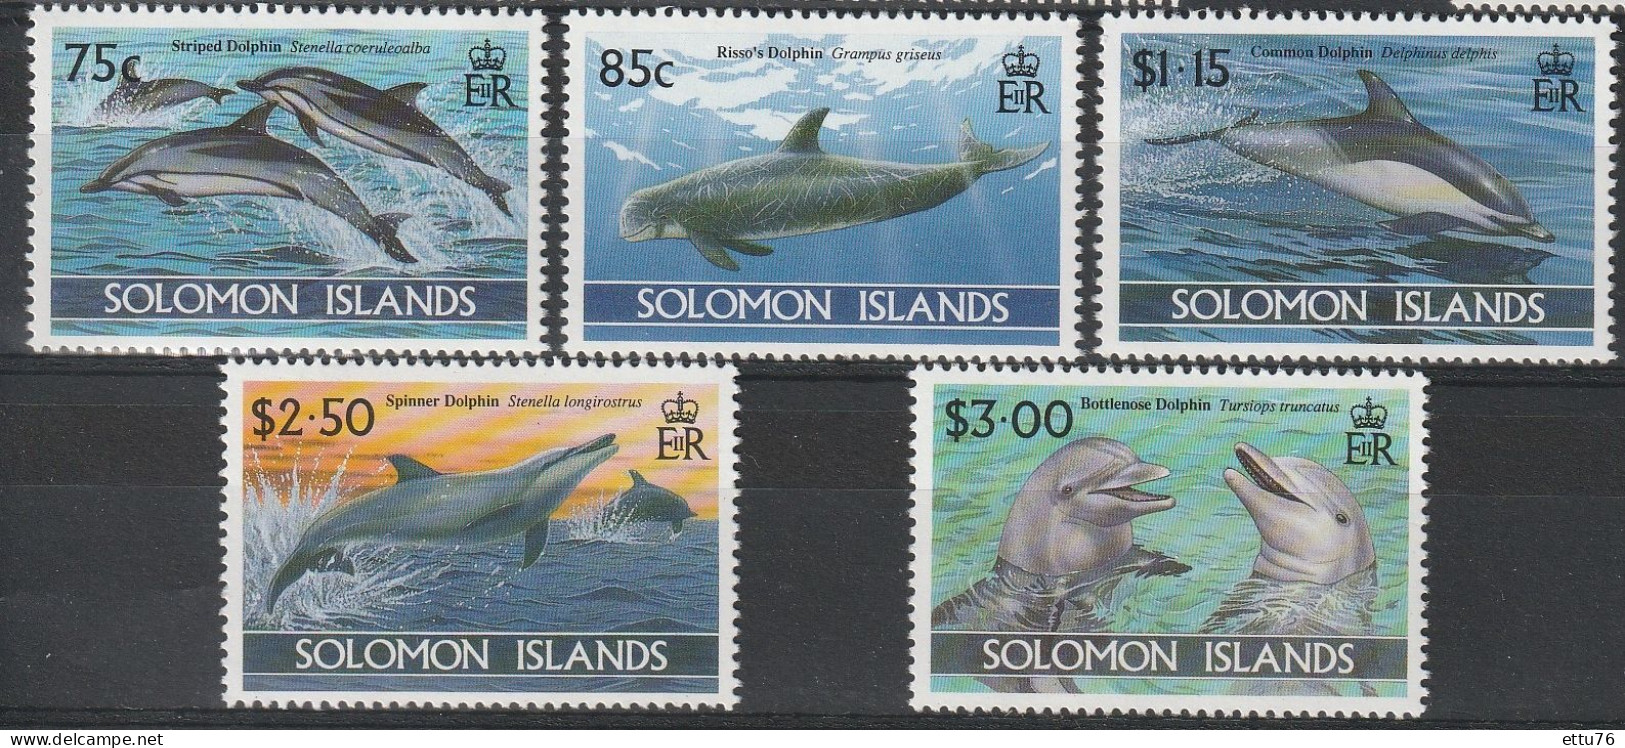 Solomon Islands 1994  Dolphins  Set  MNH - Dolfijnen